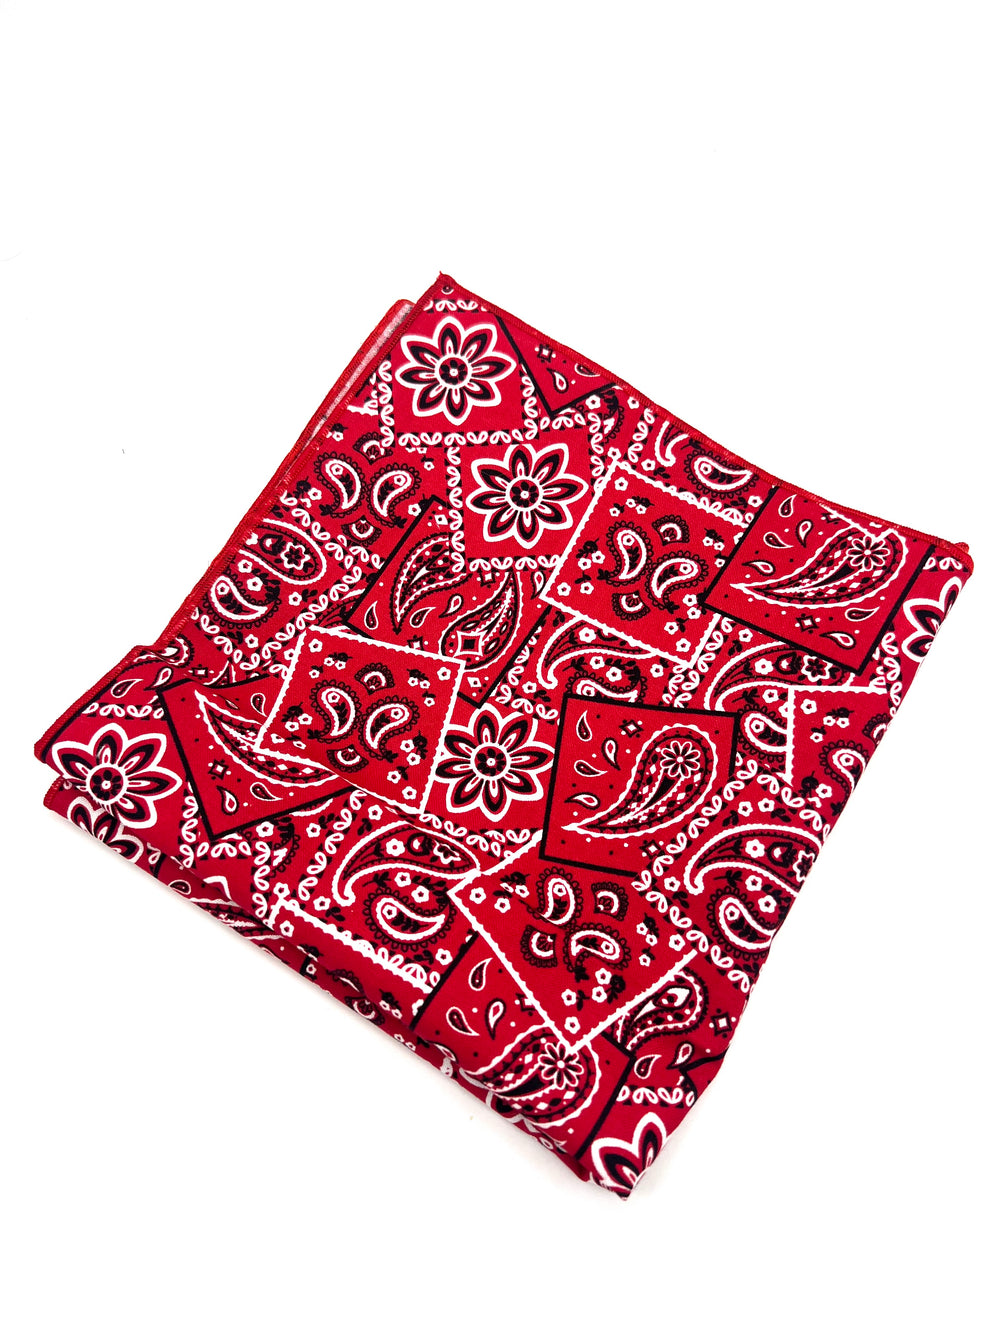 The Red Paisley Handkerchief